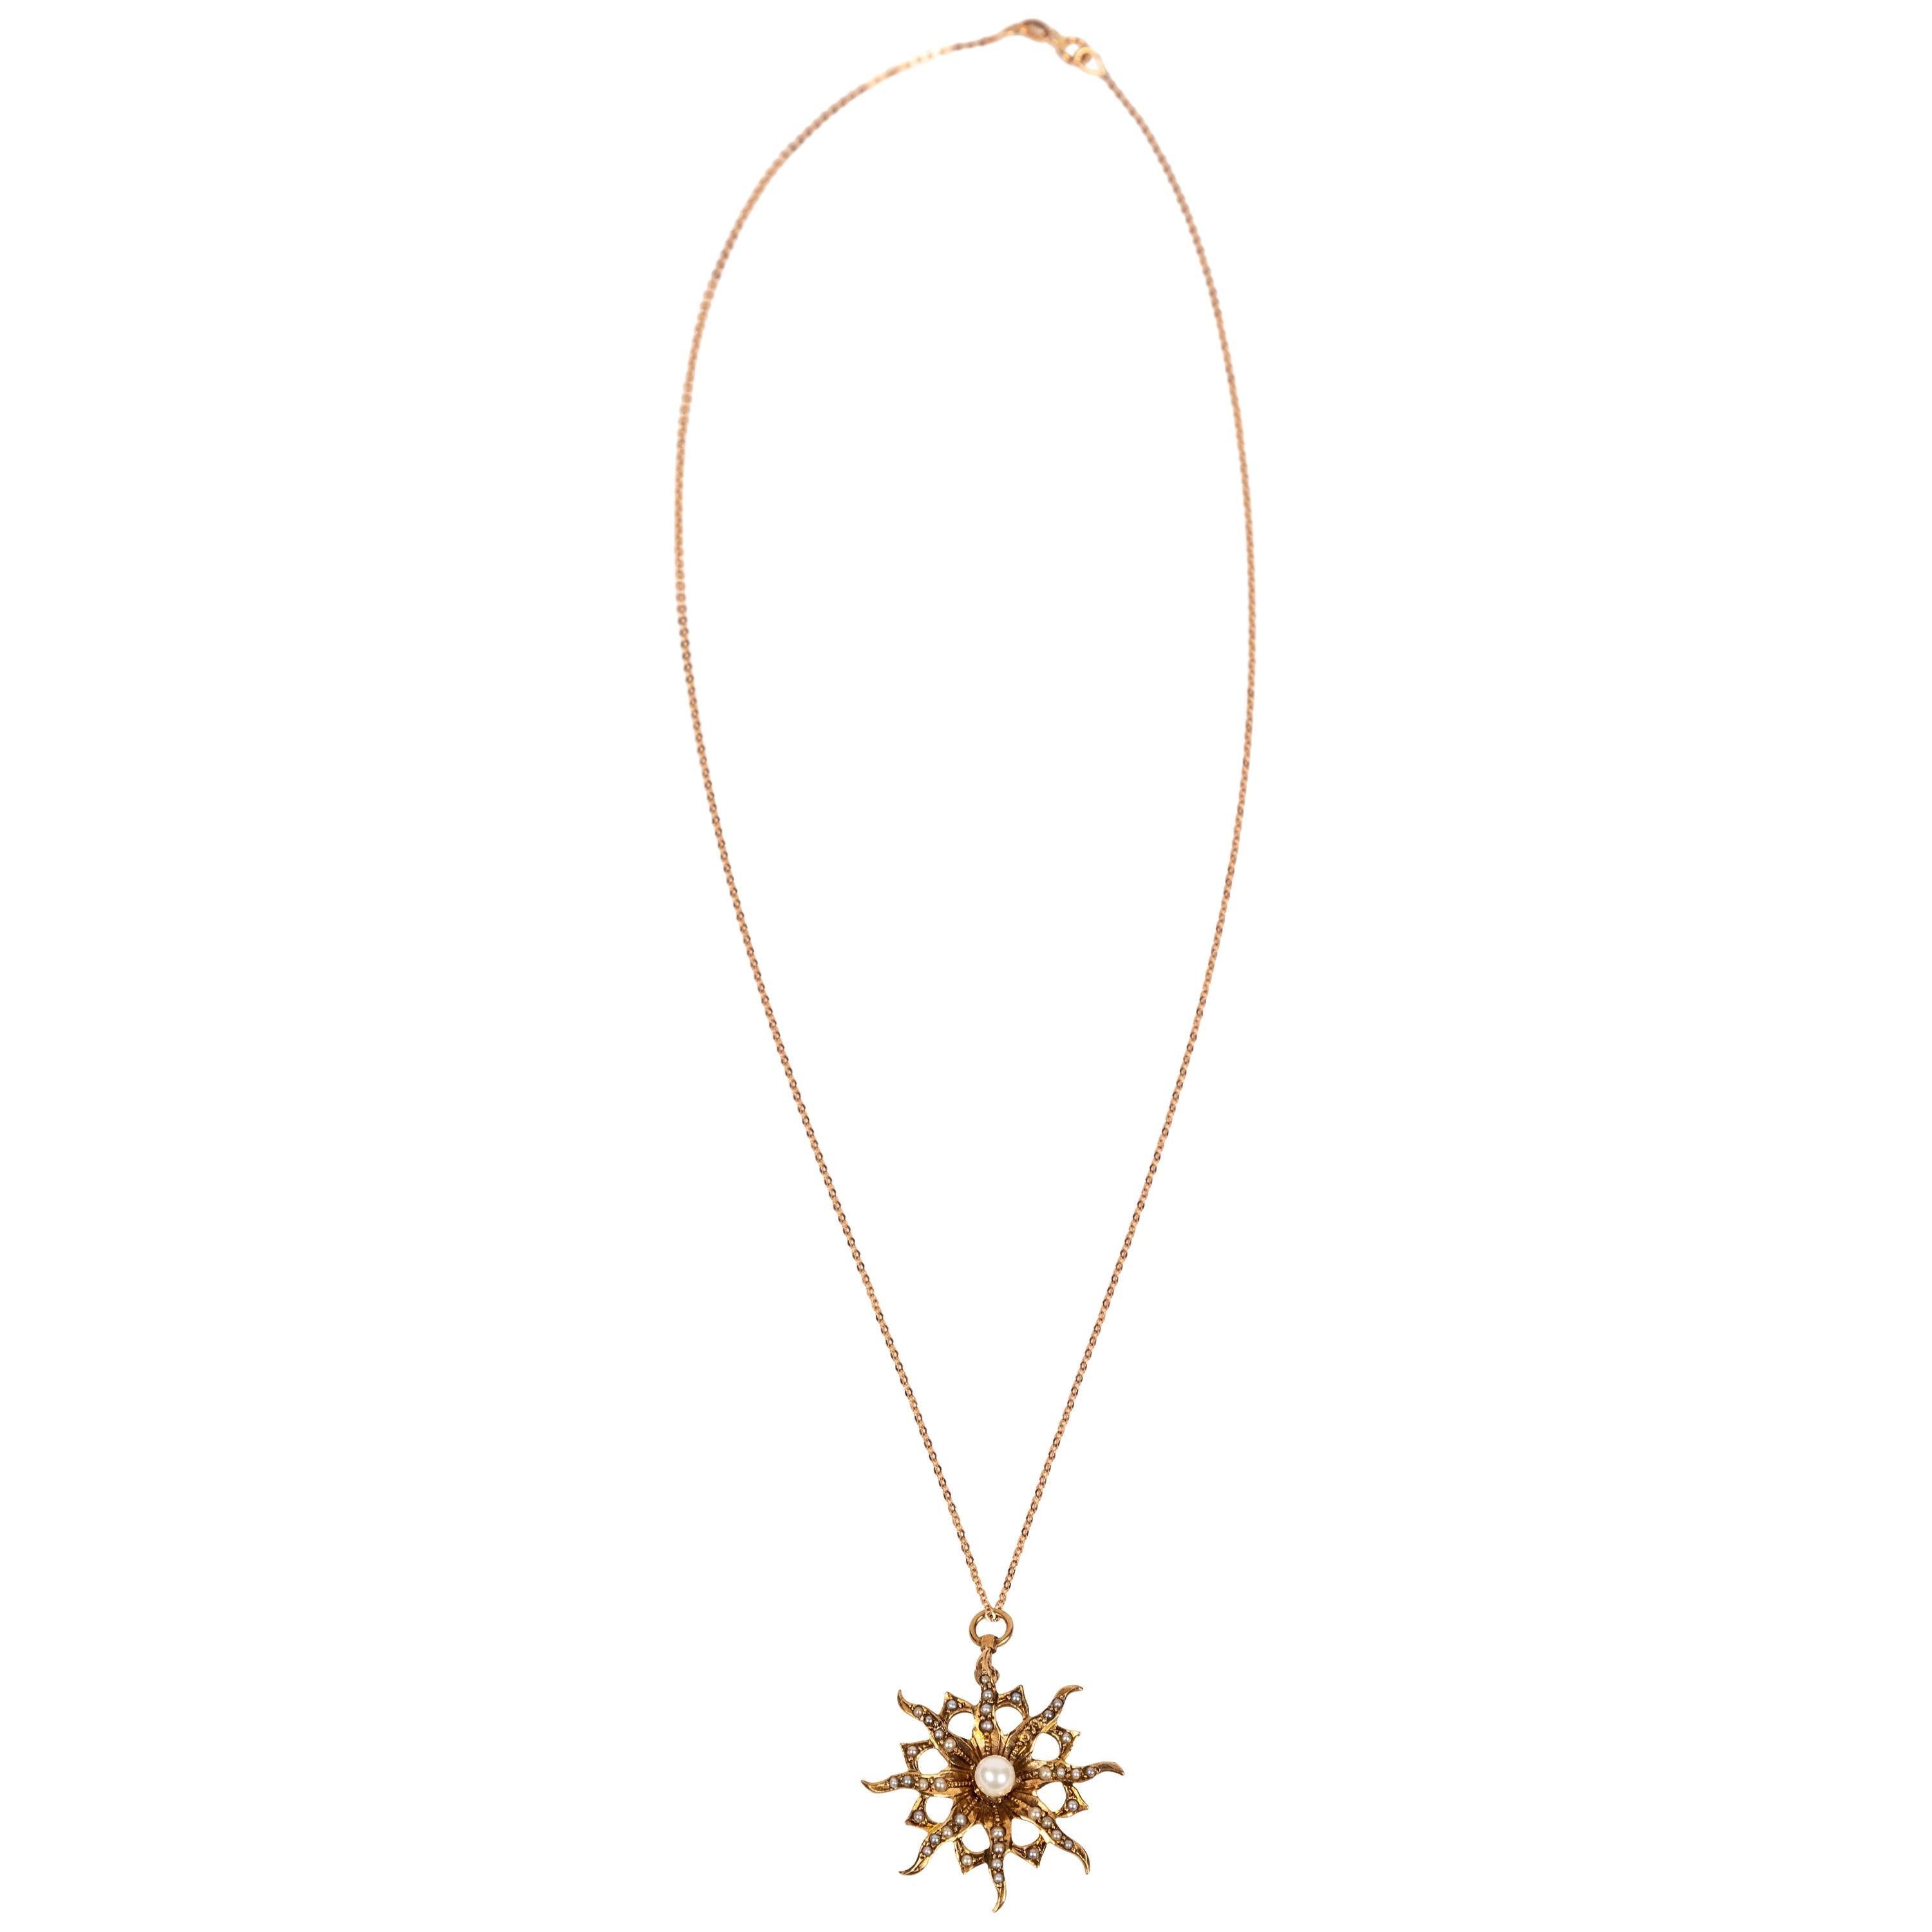 Vintage 10 Karat Rose Gold Starburst Pendant with Seed Pearls